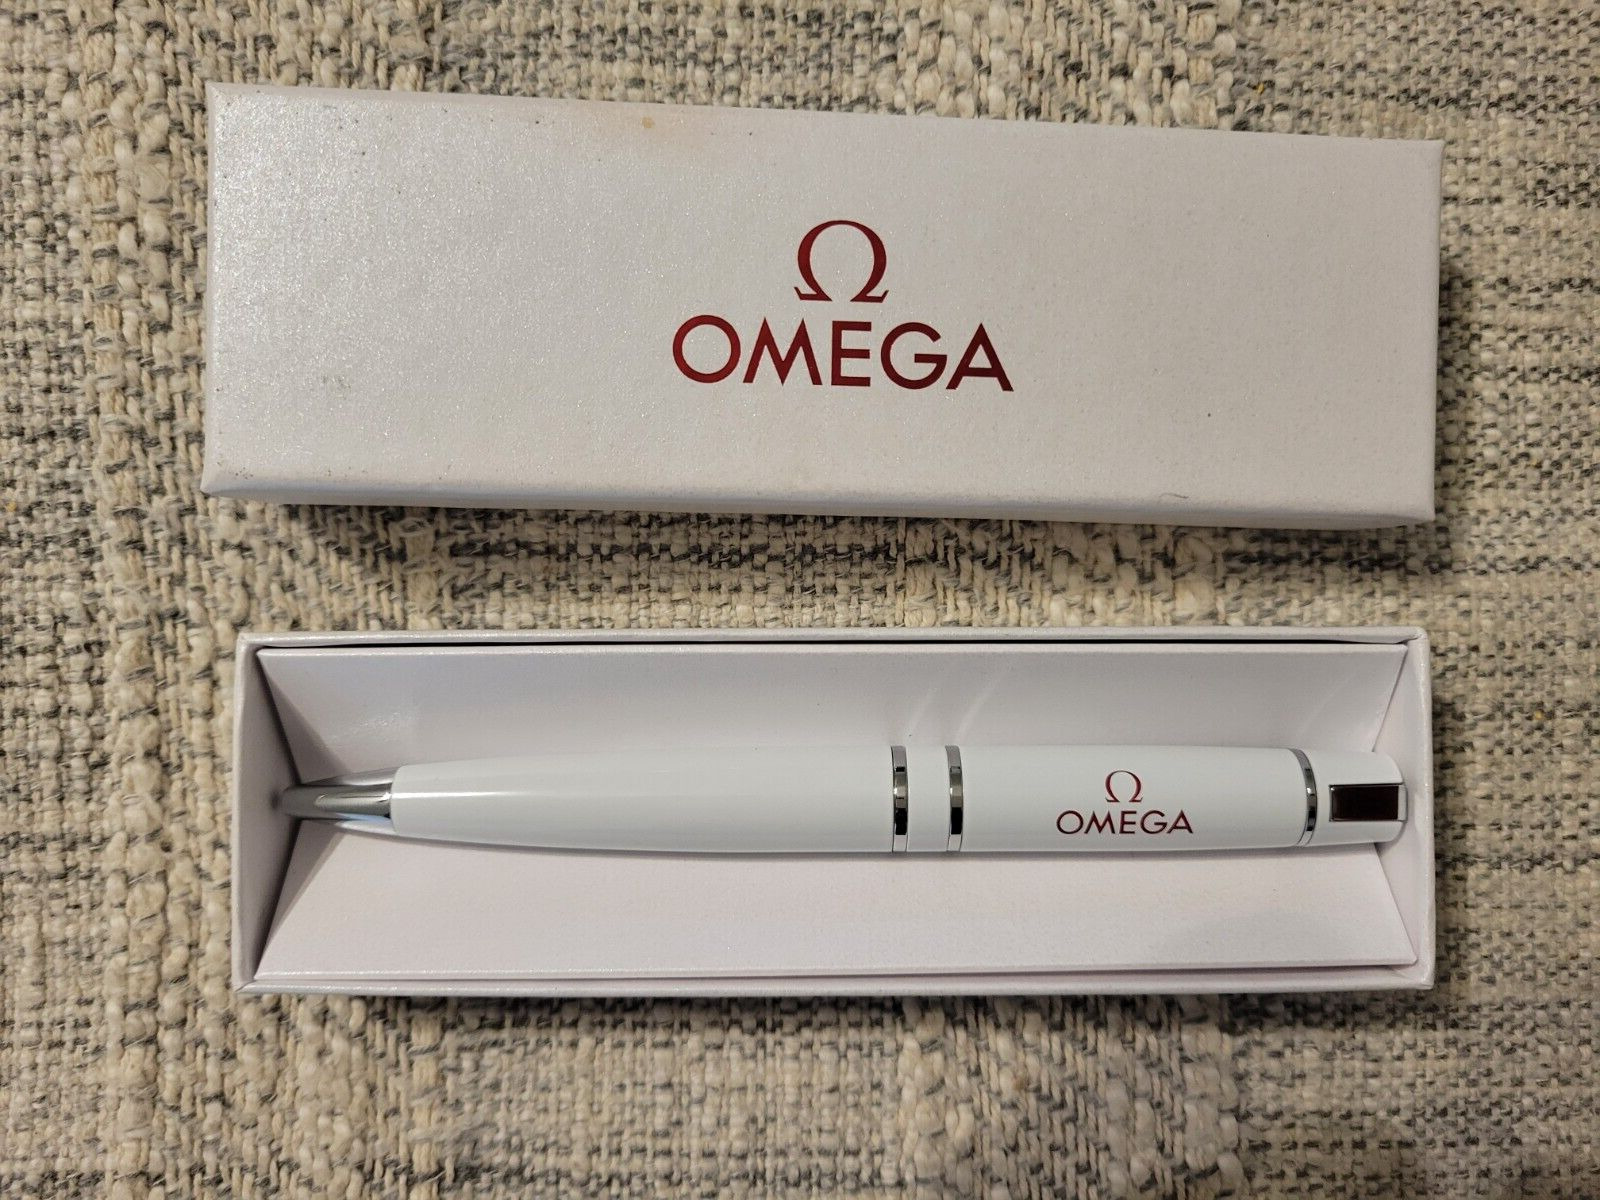 Omega Ballpoint Pen White Box Novelty For Watch Rare Original NEW GIFT SEAMASTER